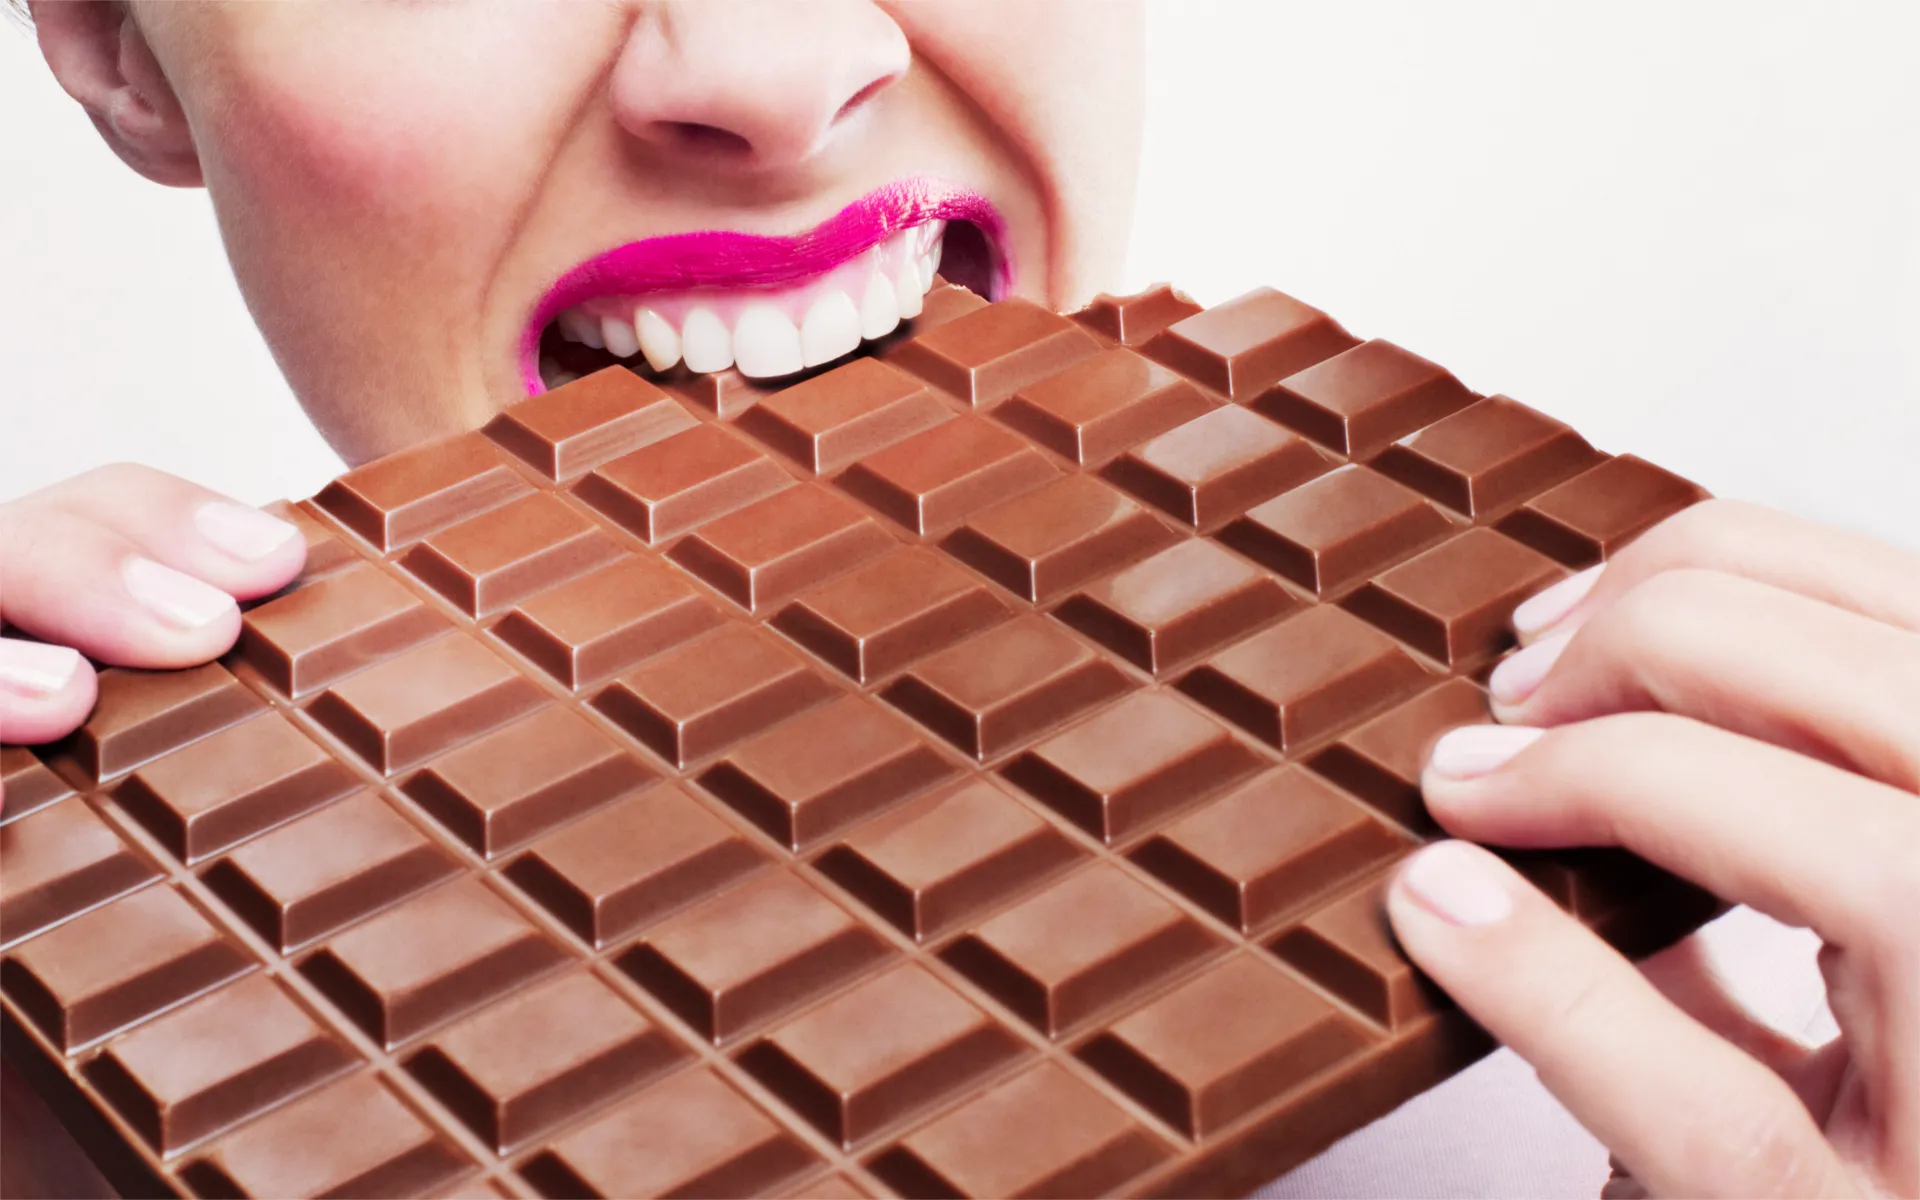 Why is Chocolate So Addictive?